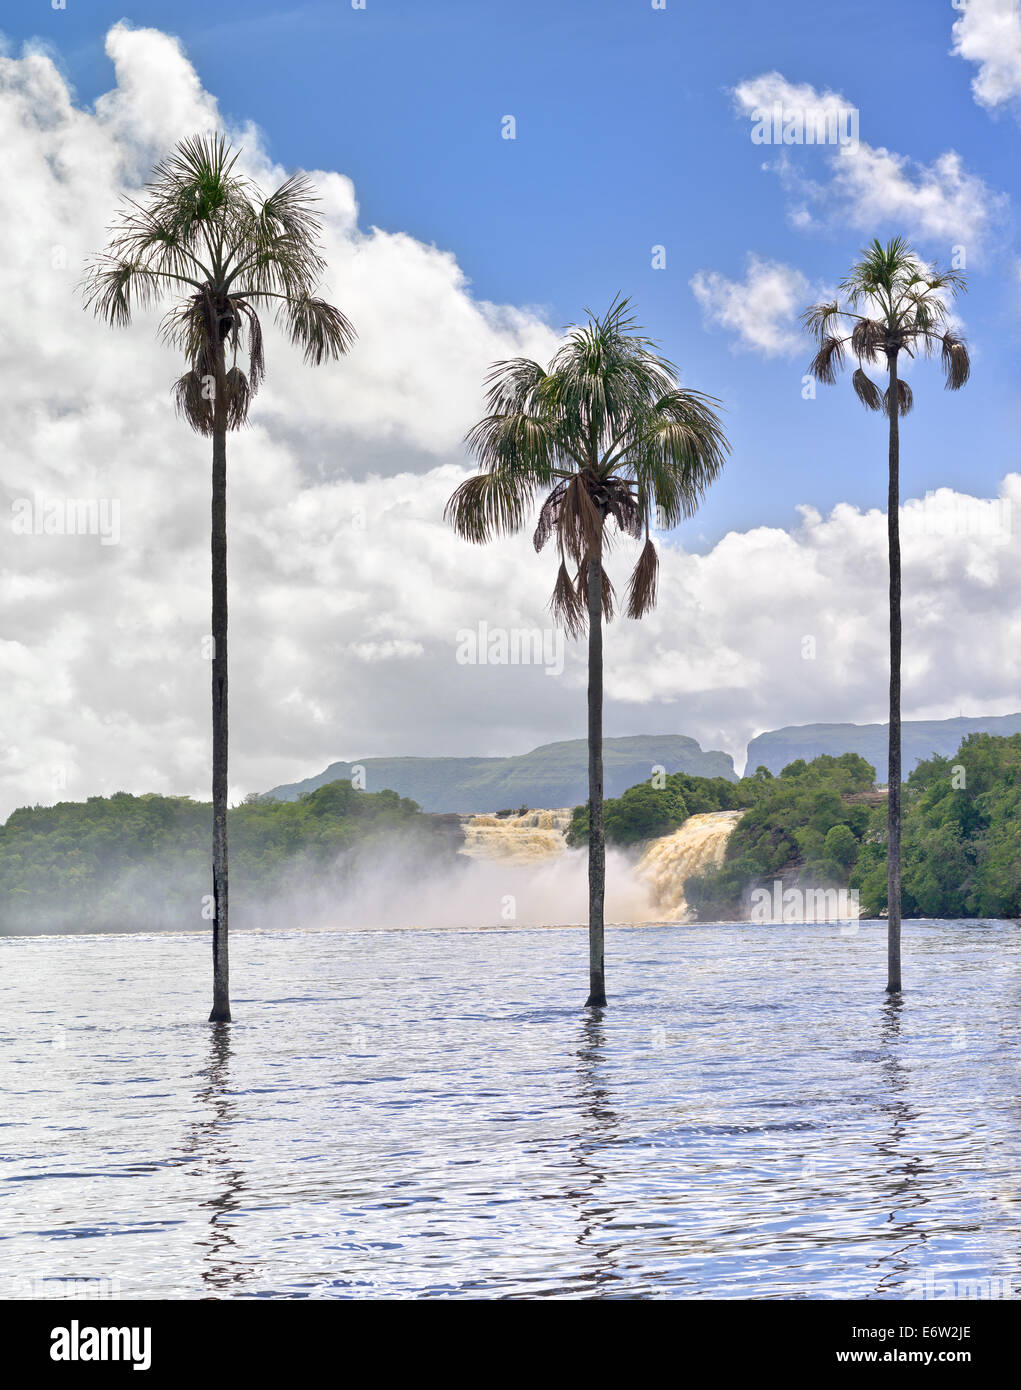 Drei Palmen in der Flusseslagune. Stockfoto